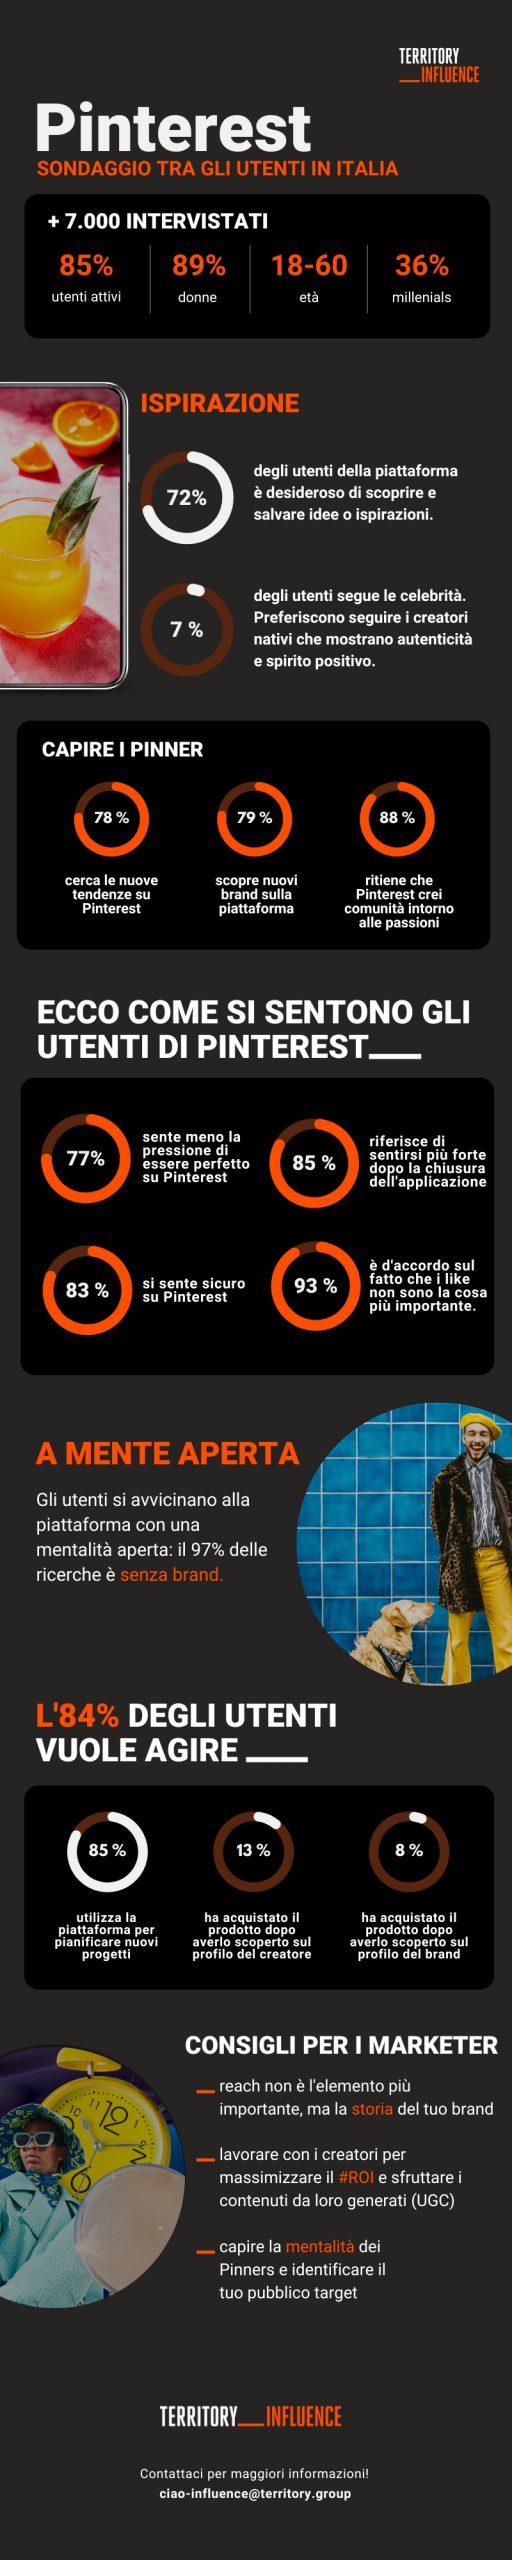 Pinterest Infografica - TERRITORY Influence